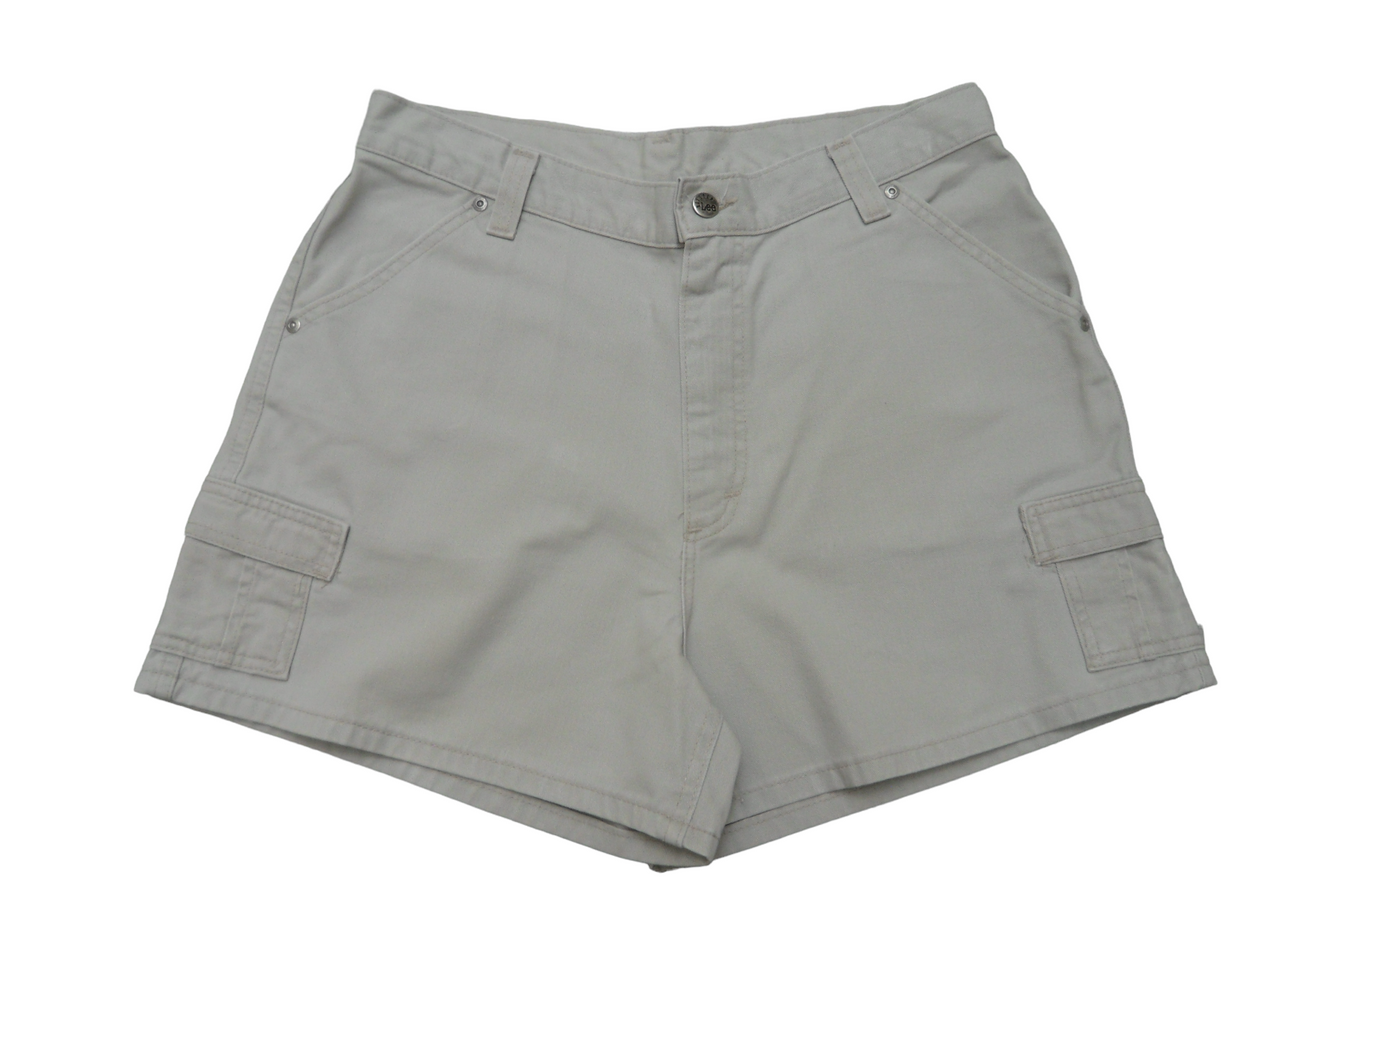 Vintage Riveted LEE Taupe Cotton Women's Cargo shorts Size 12/14 (AU)